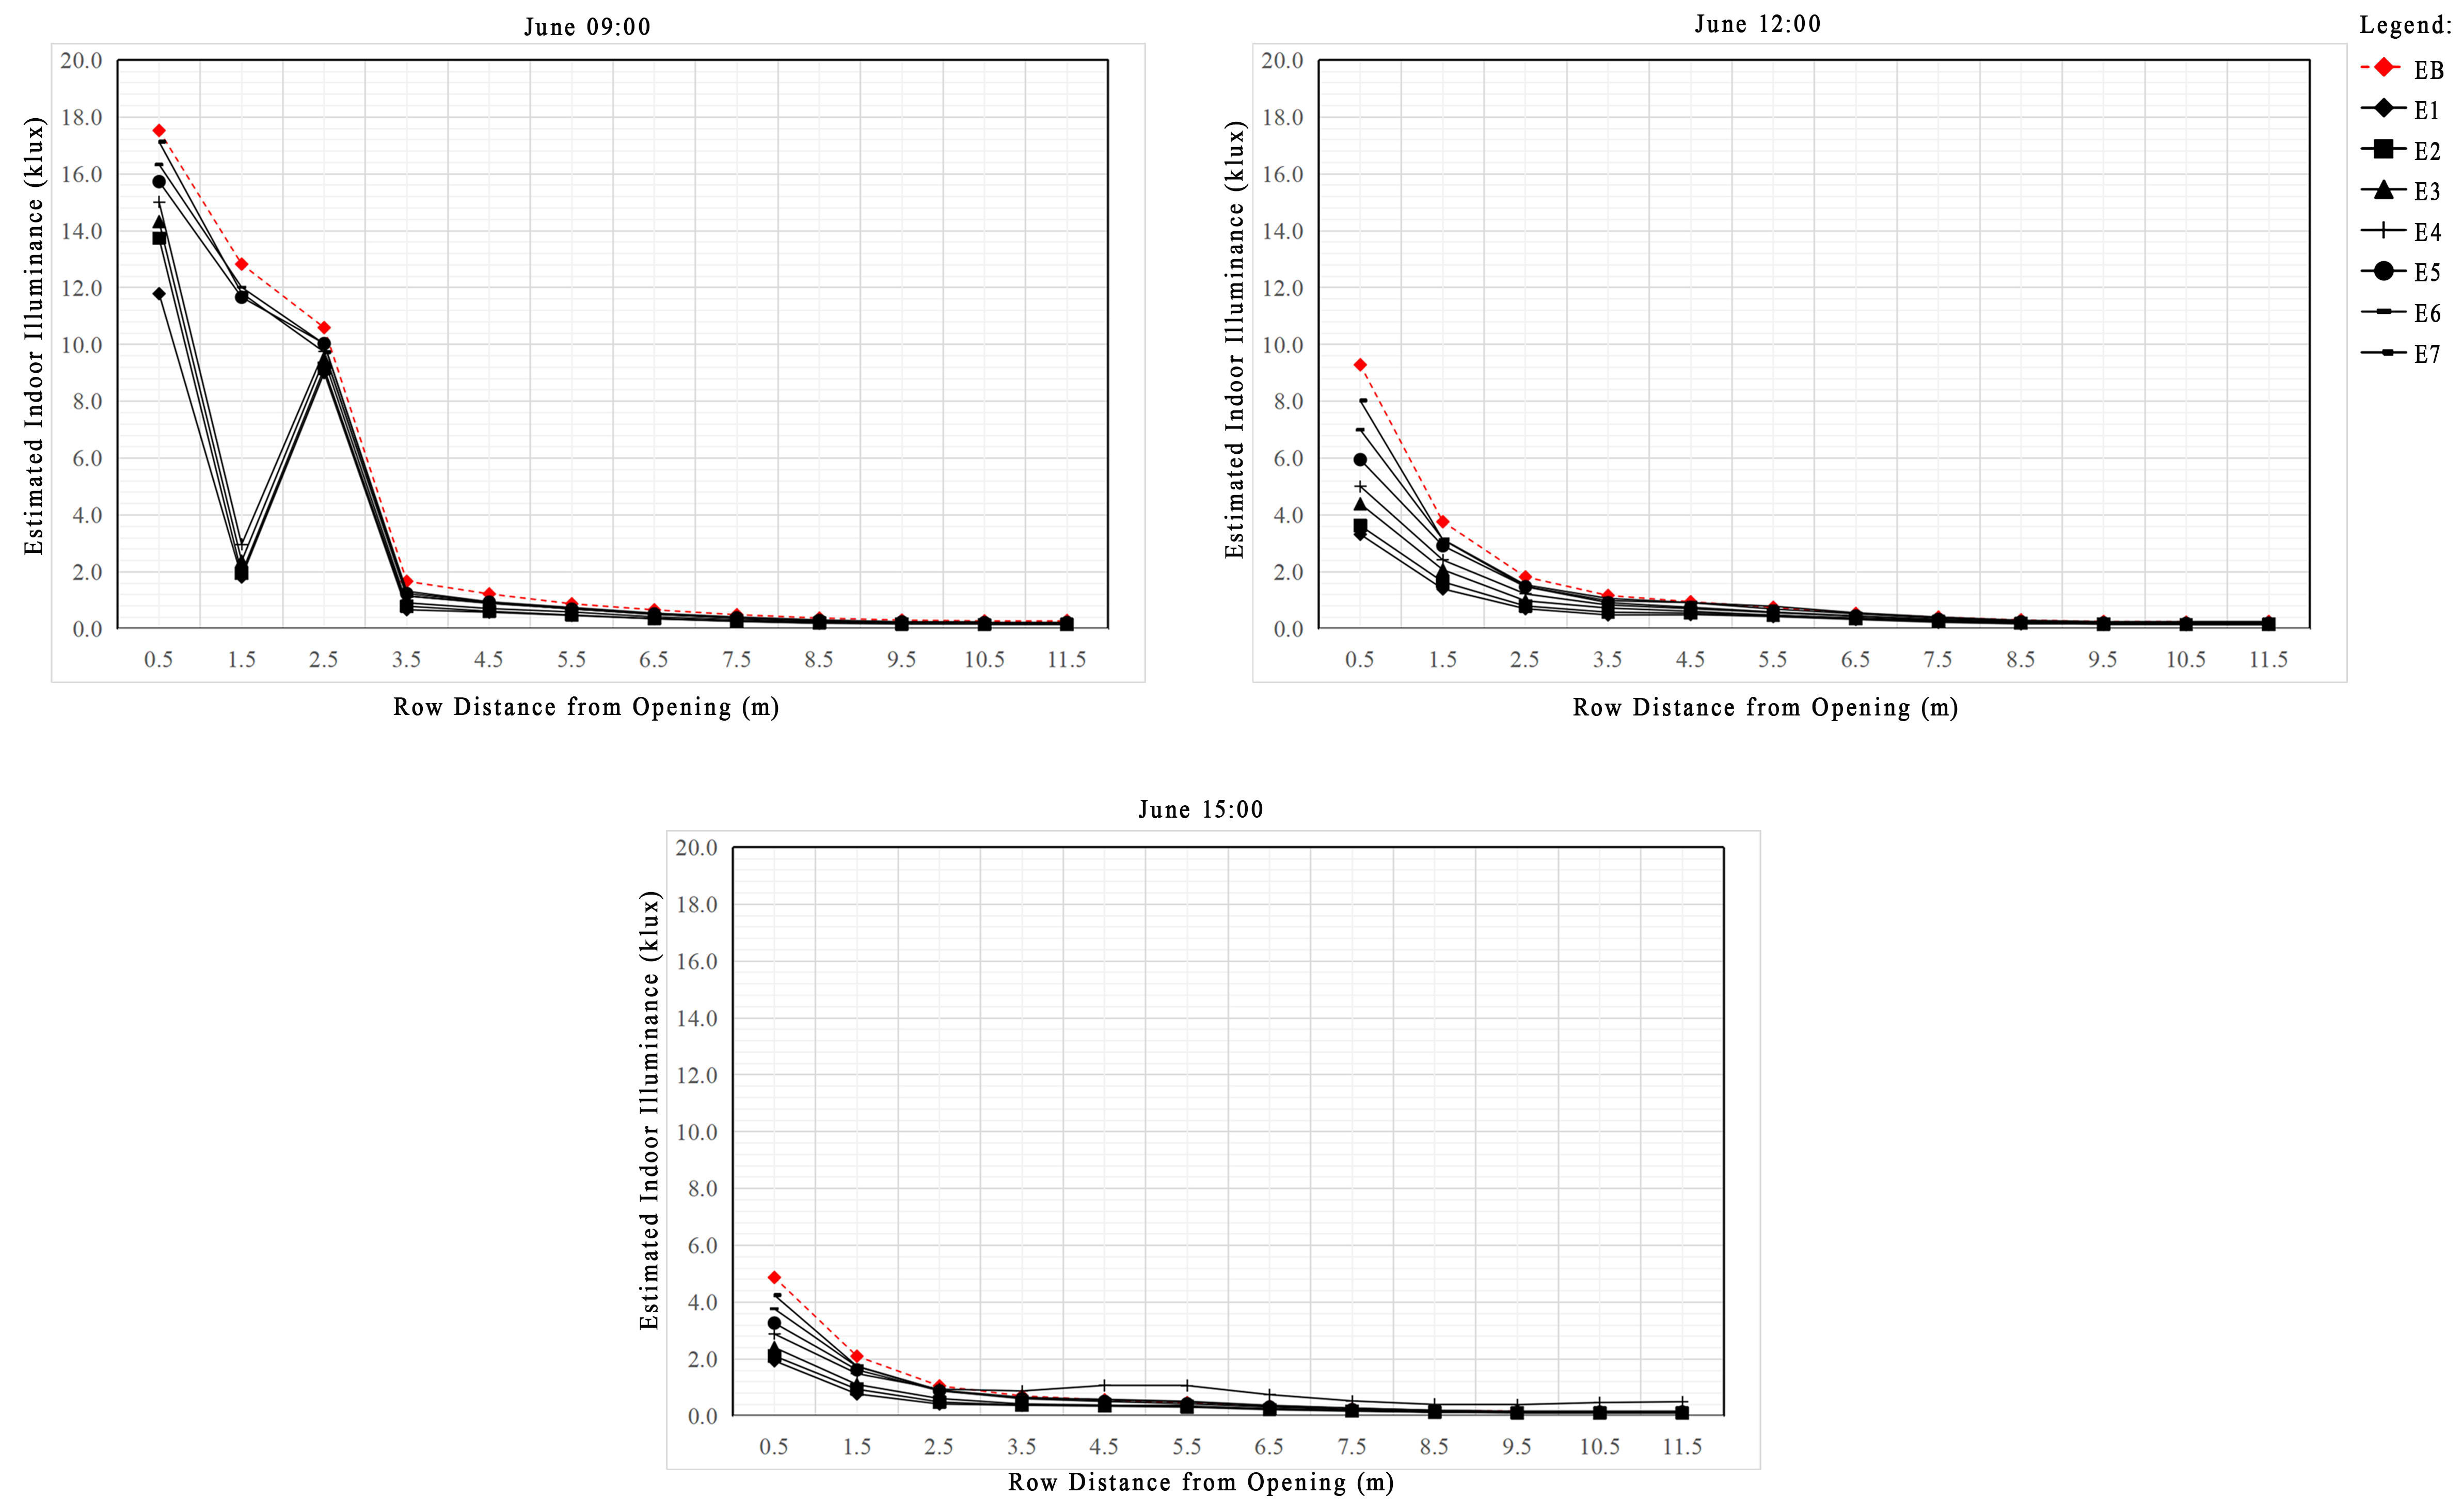 Estimated indoor illuminance performance of base case and LS cases based on East orientation (June).